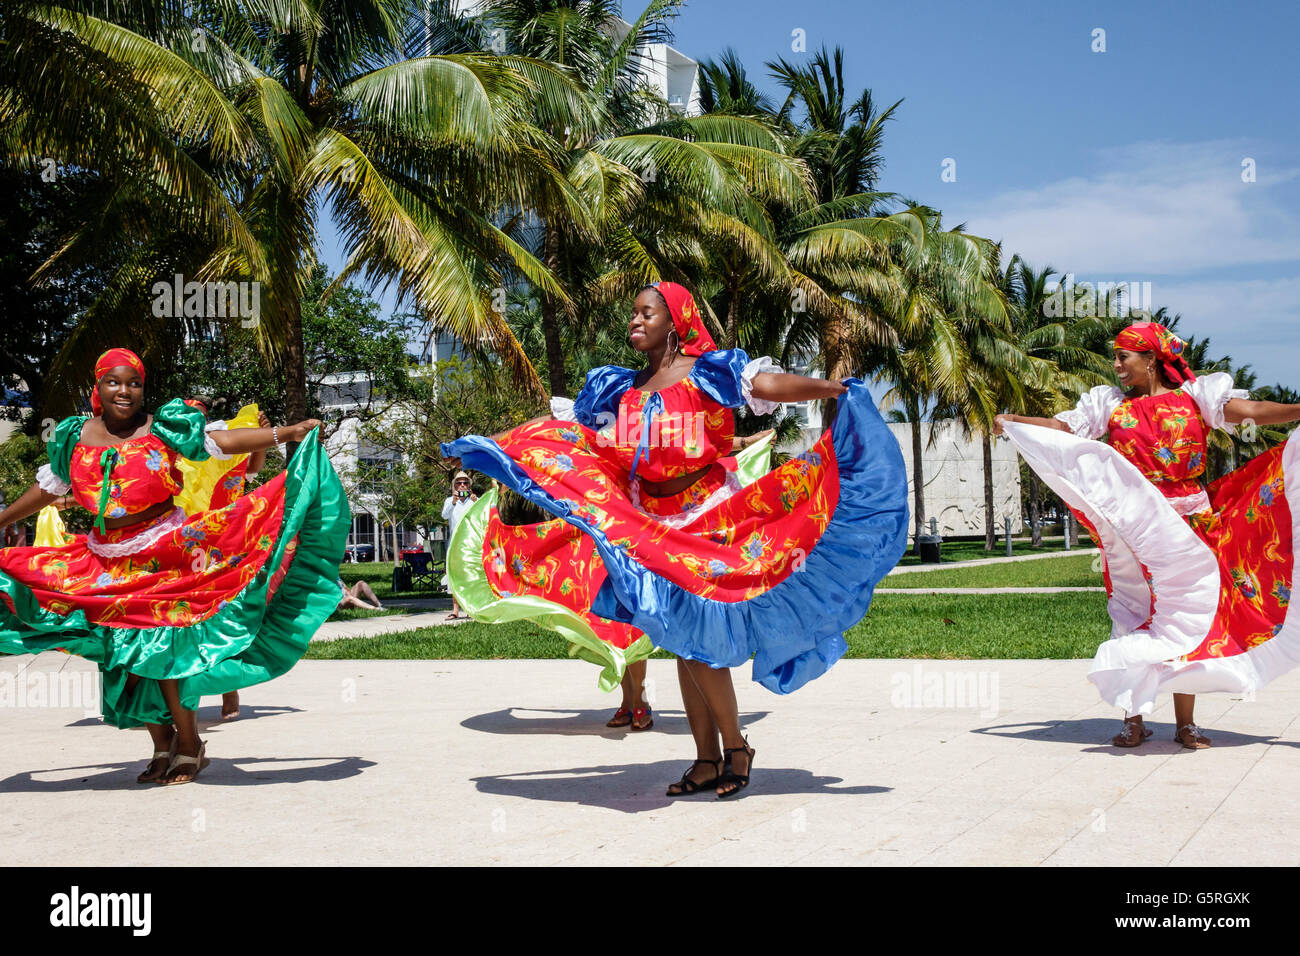 Miami Beach Florida,Haitian,adult adults,woman female women,dancers,costume,outfit,clothing,folk,quadrille,karabela dress,traditional,performers,Black Stock Photo